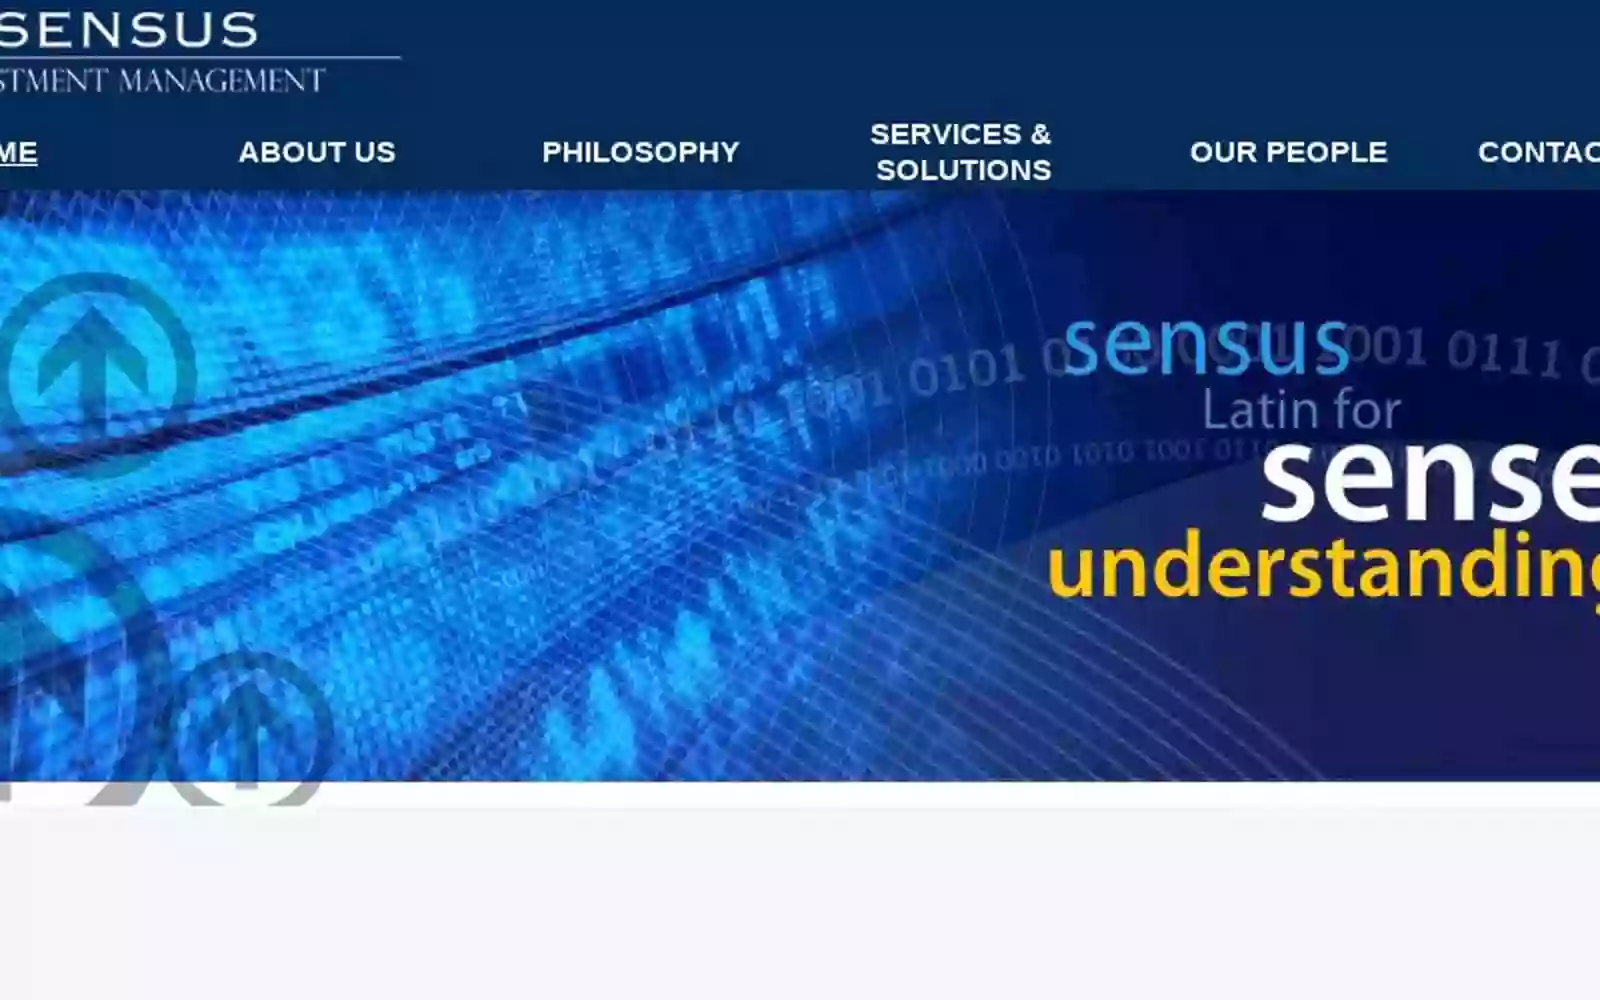 Sensus Investment Management Group